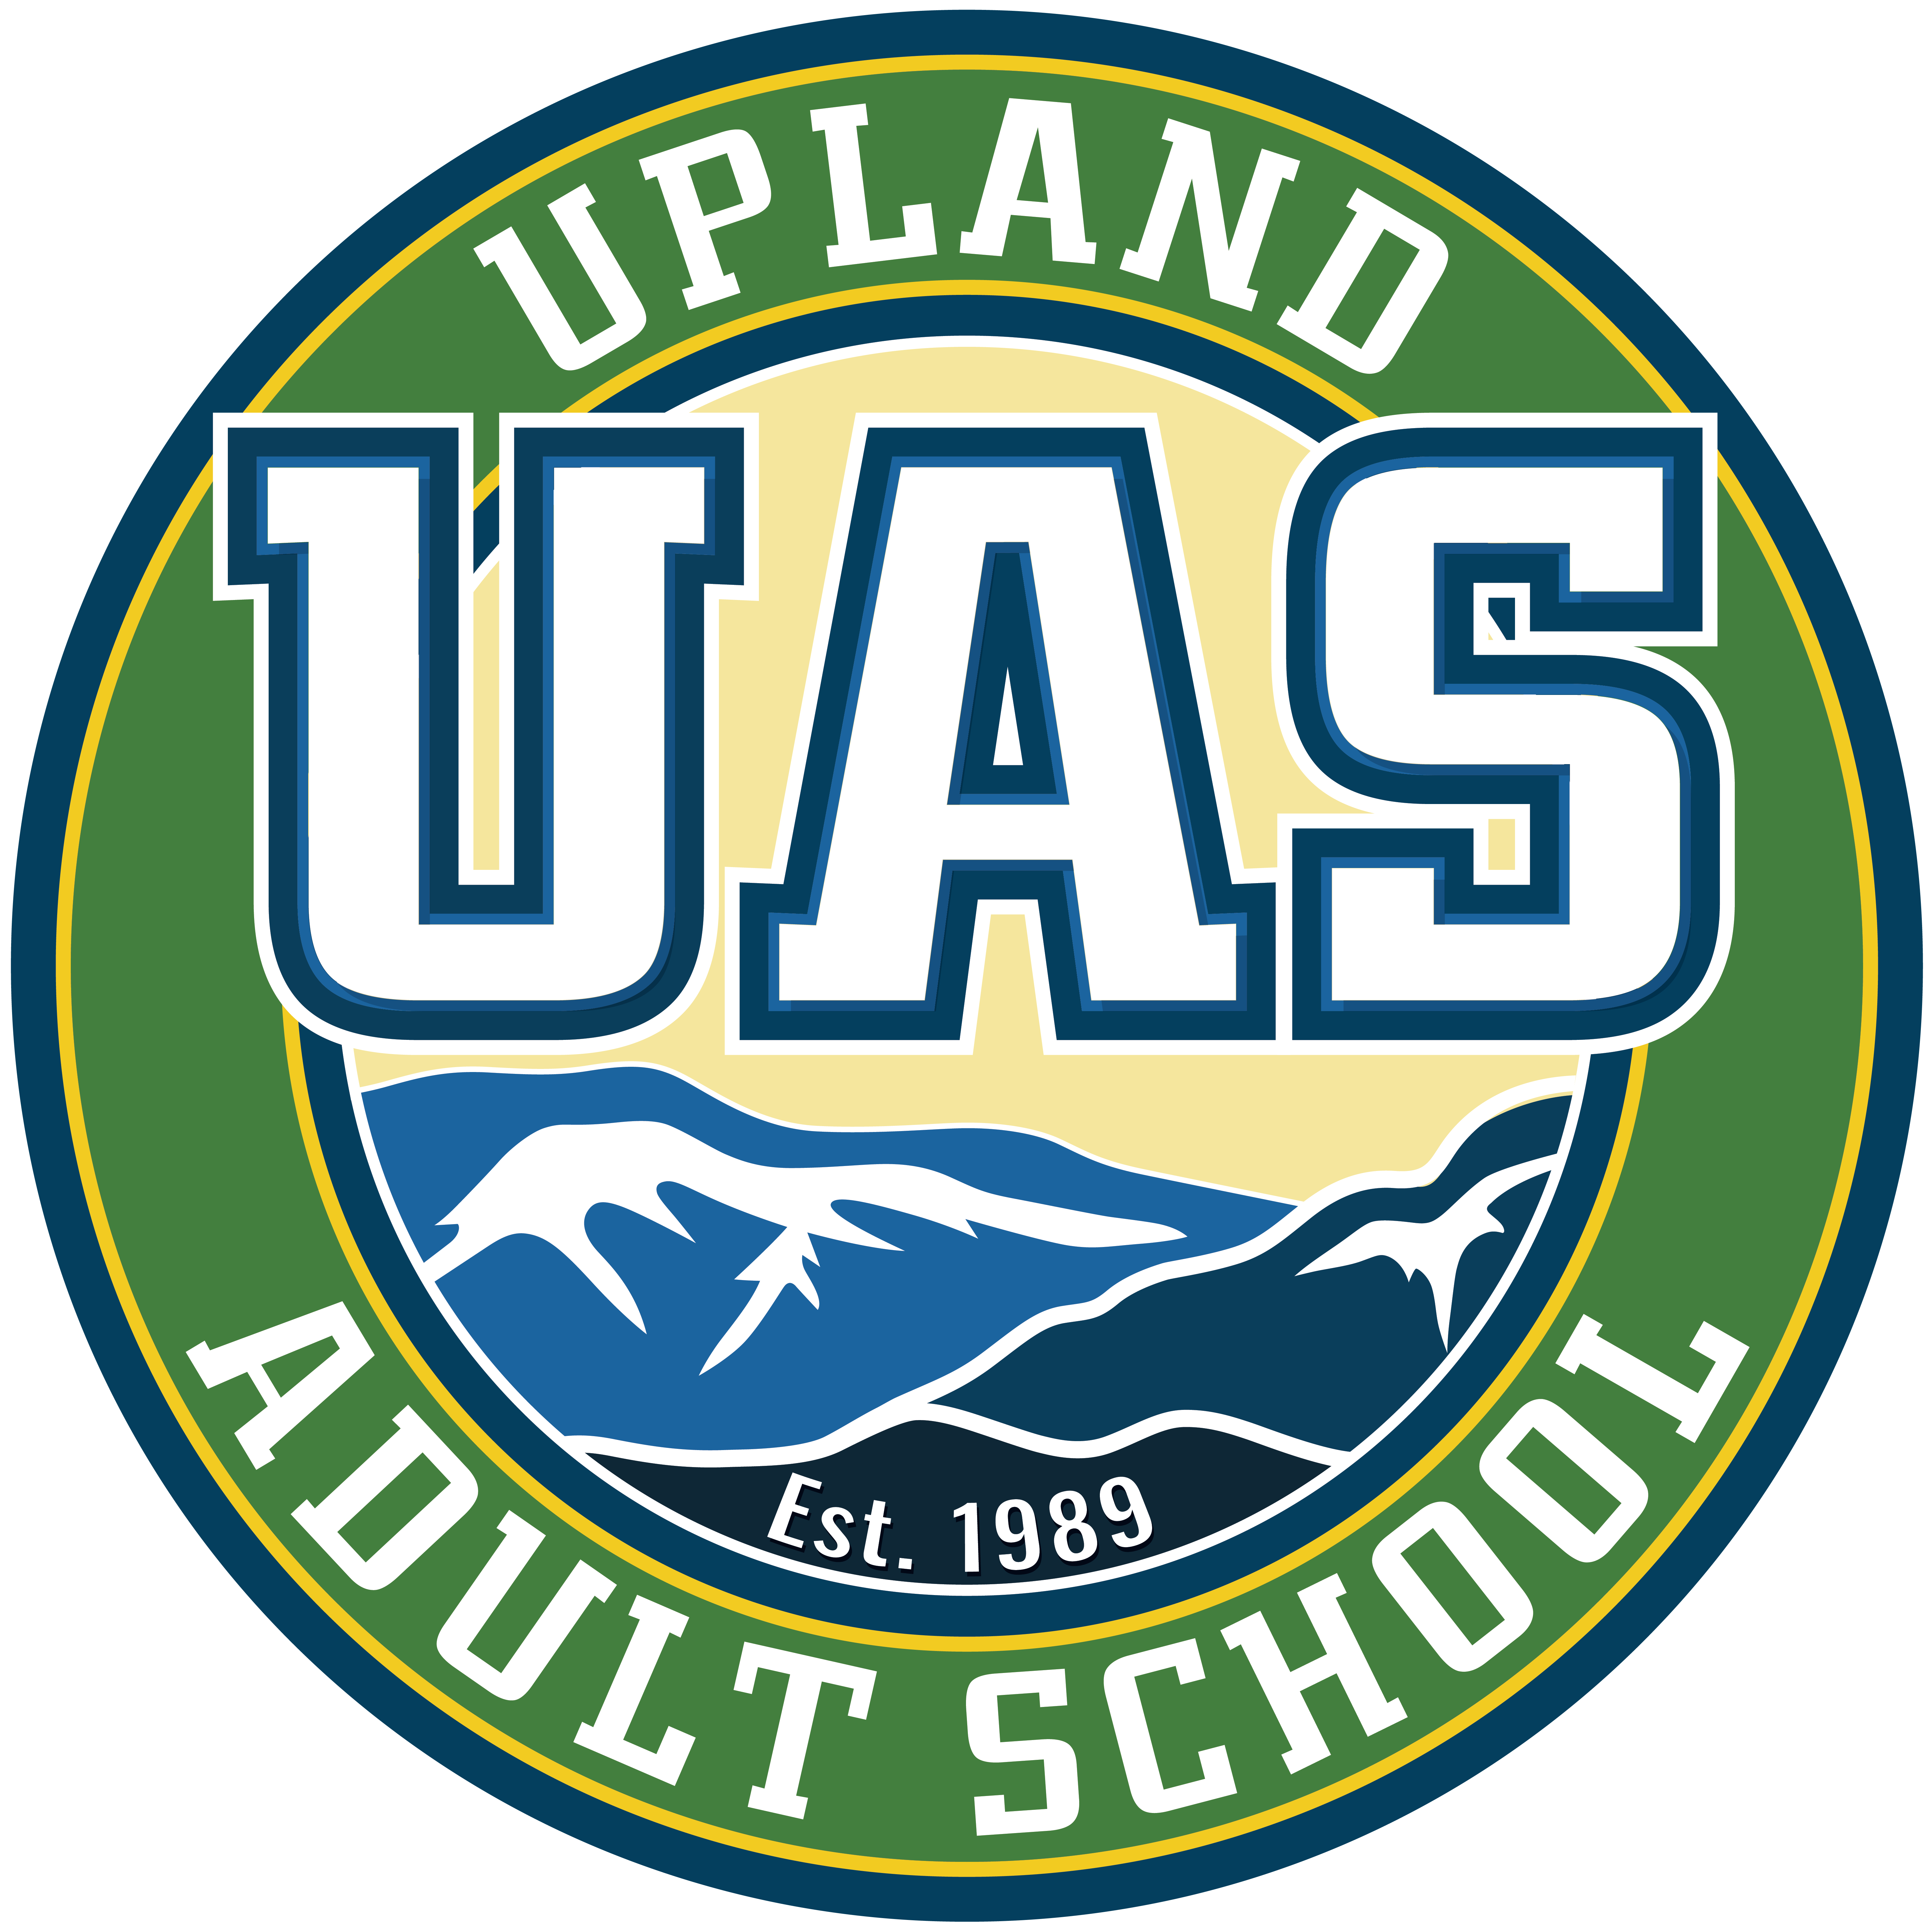 Upland Adult School logo